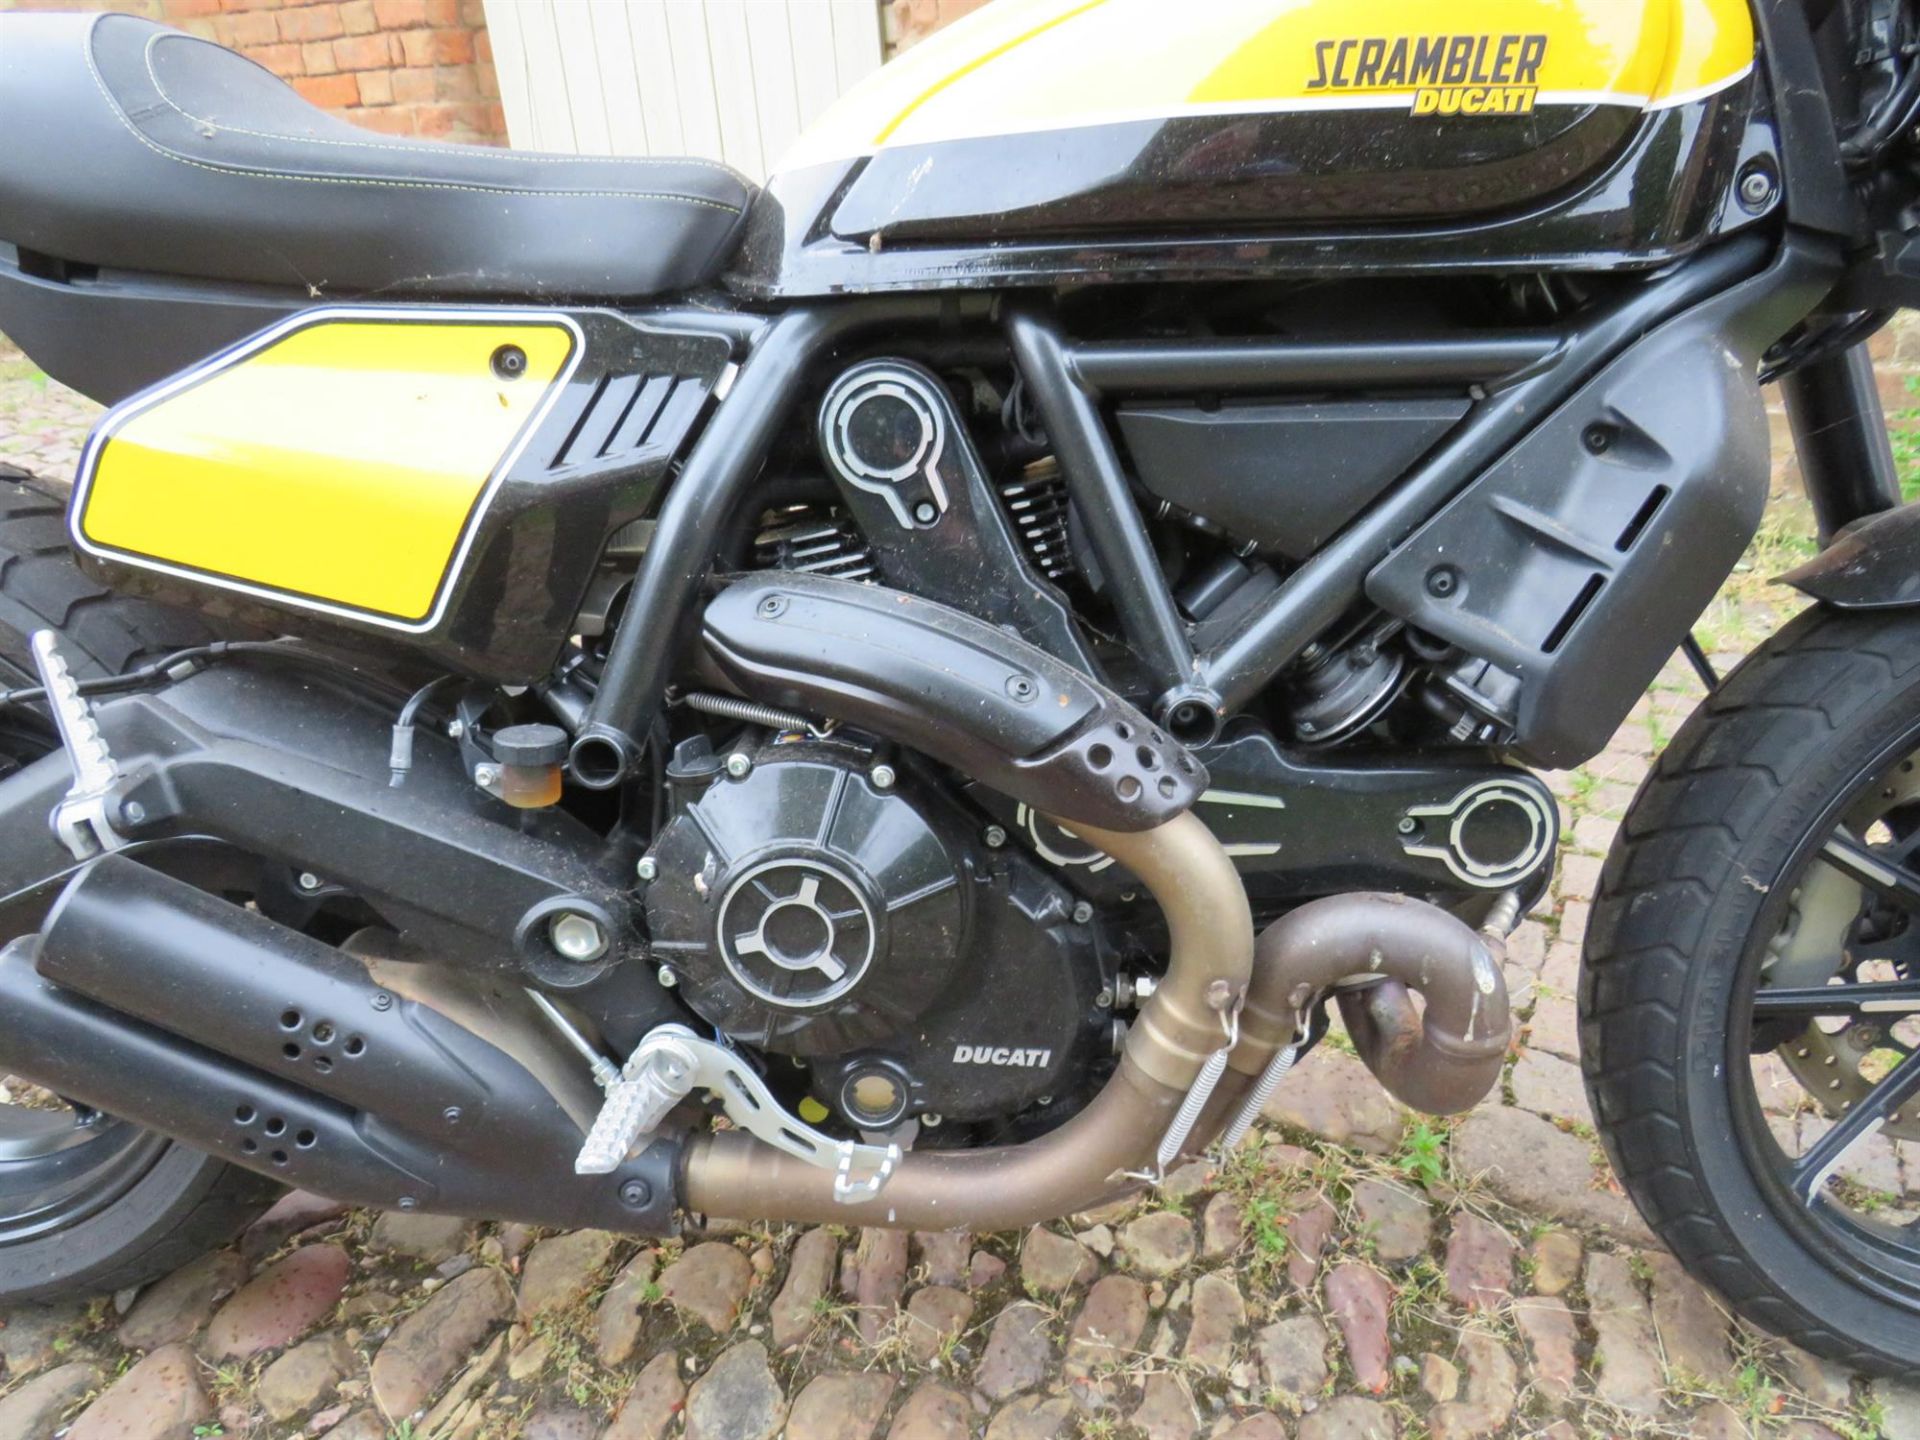 2019 Ducati Scrambler Full Throttle 803cc - Image 3 of 10